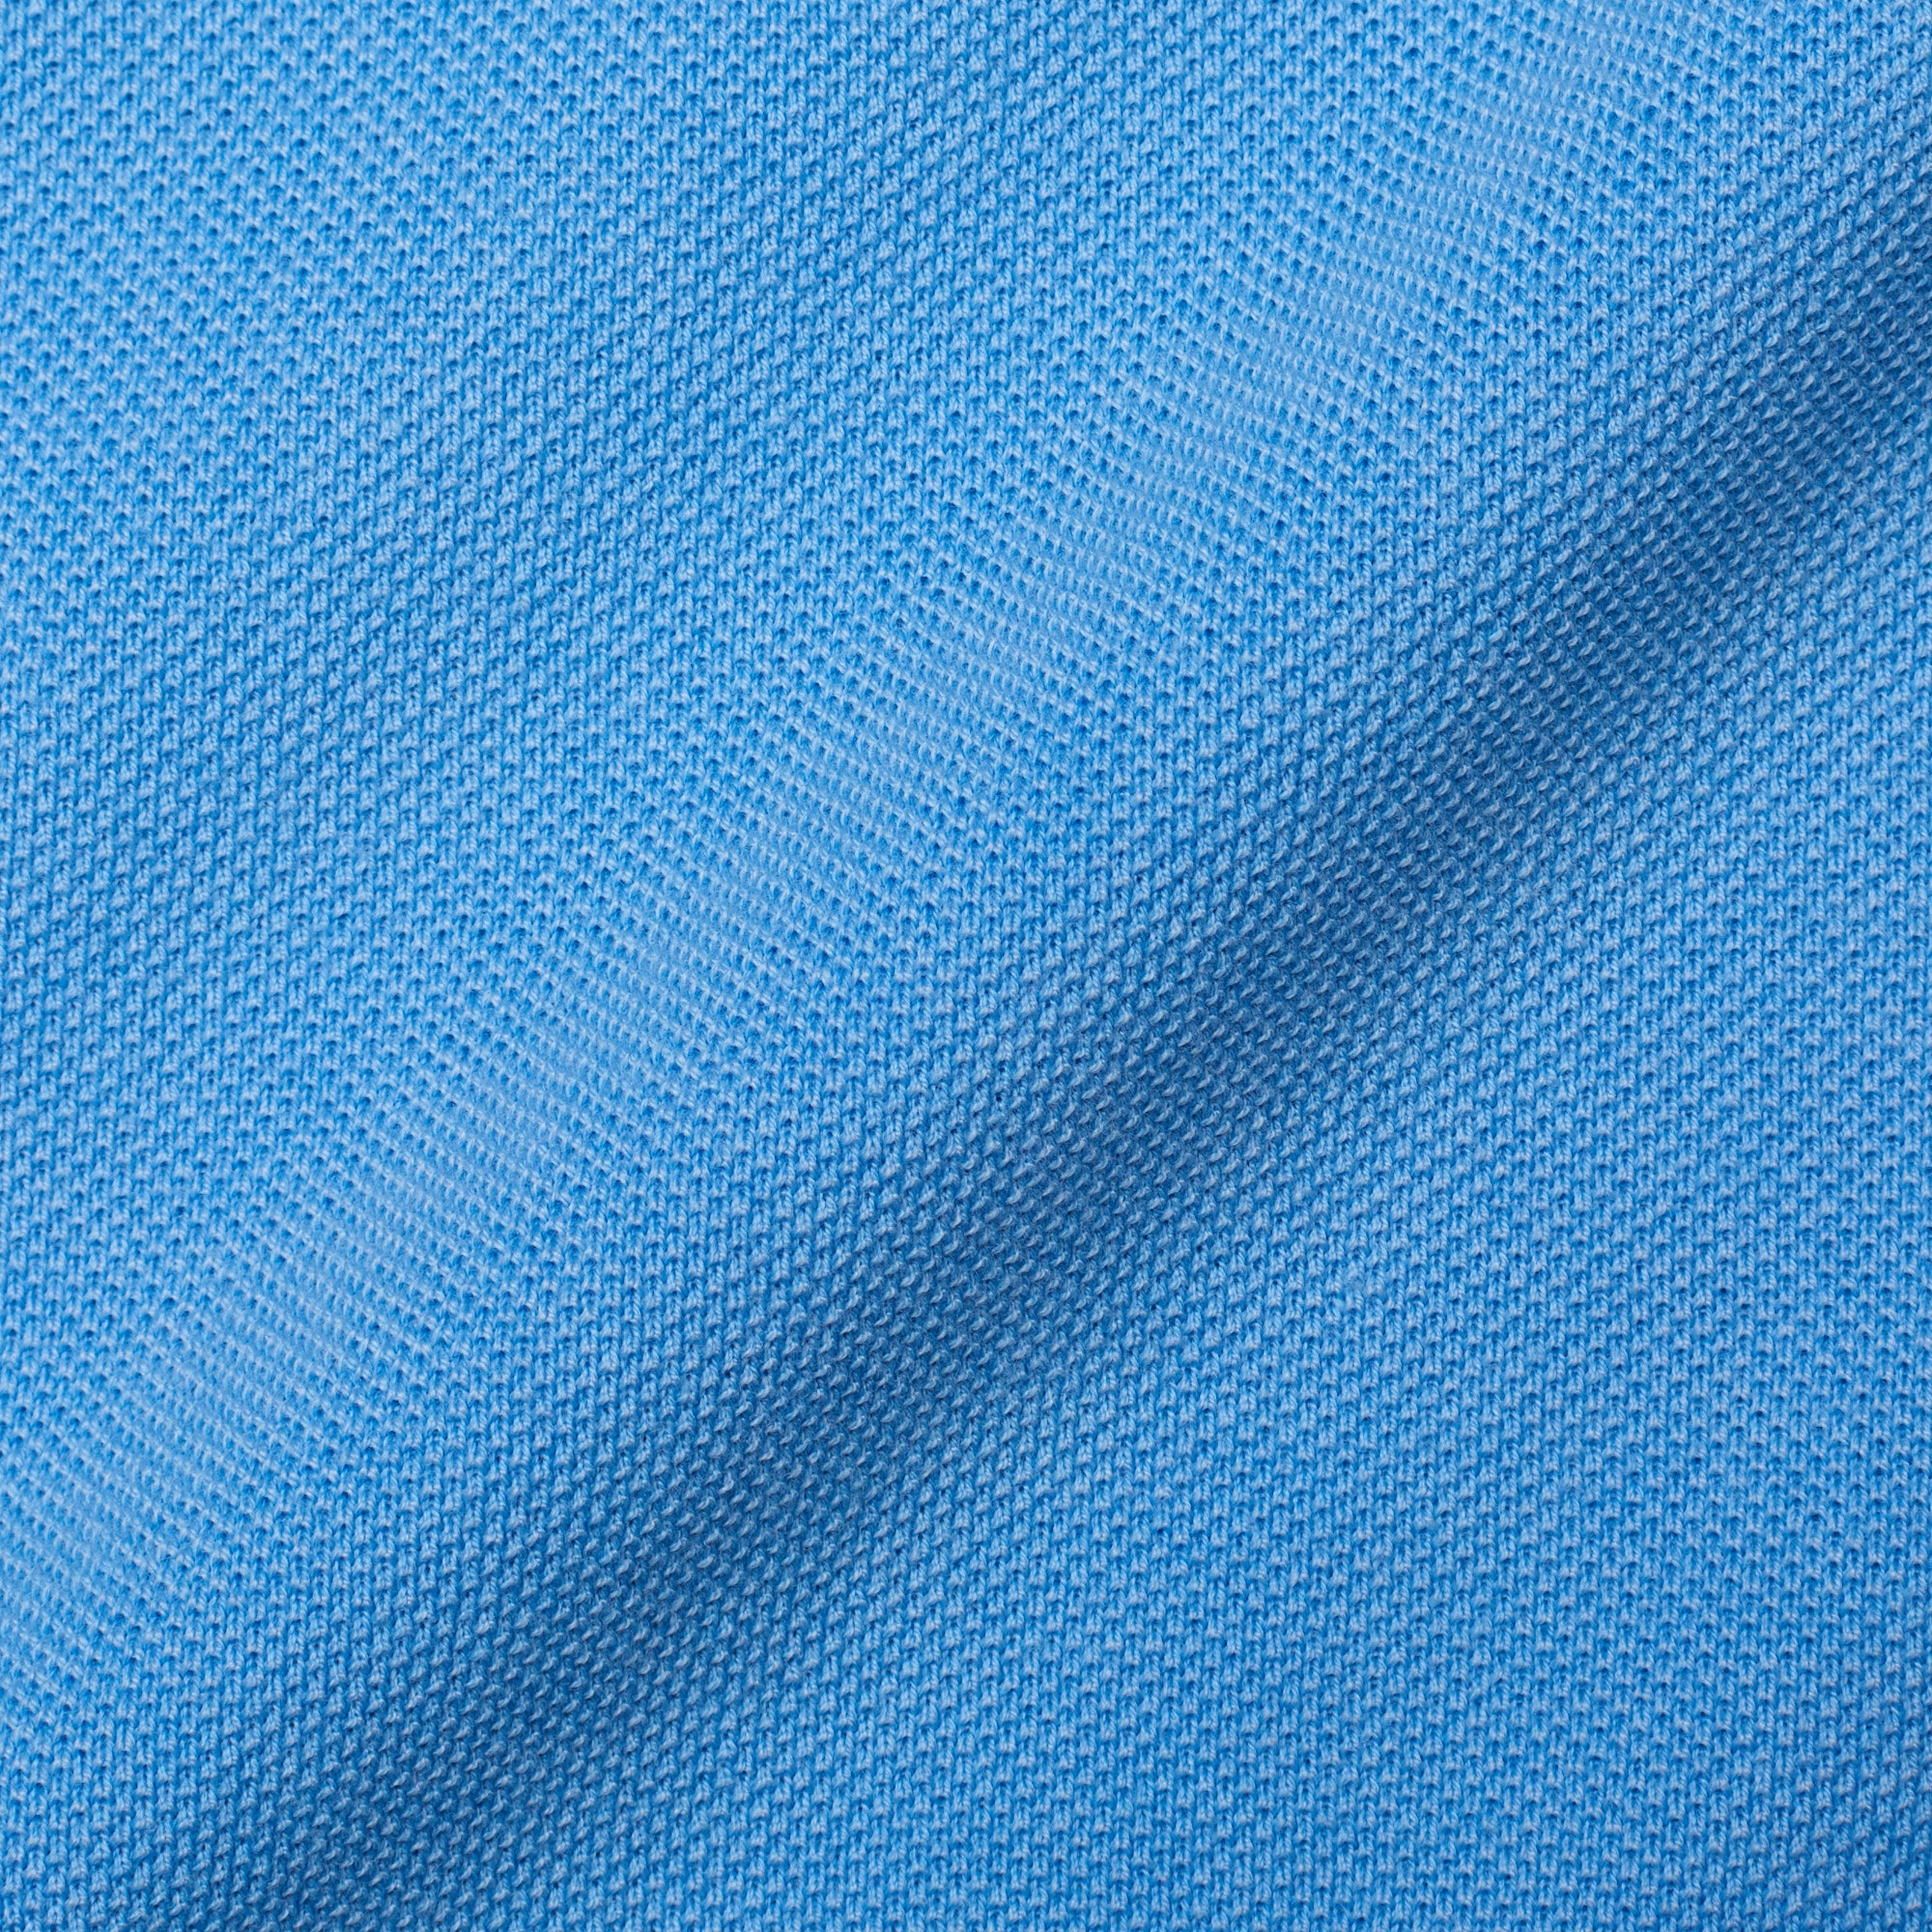 FEDELI 34 LAB "North" Blue Cotton Pique Short Sleeve Polo Shirt EU 48 NEW US S FEDELI